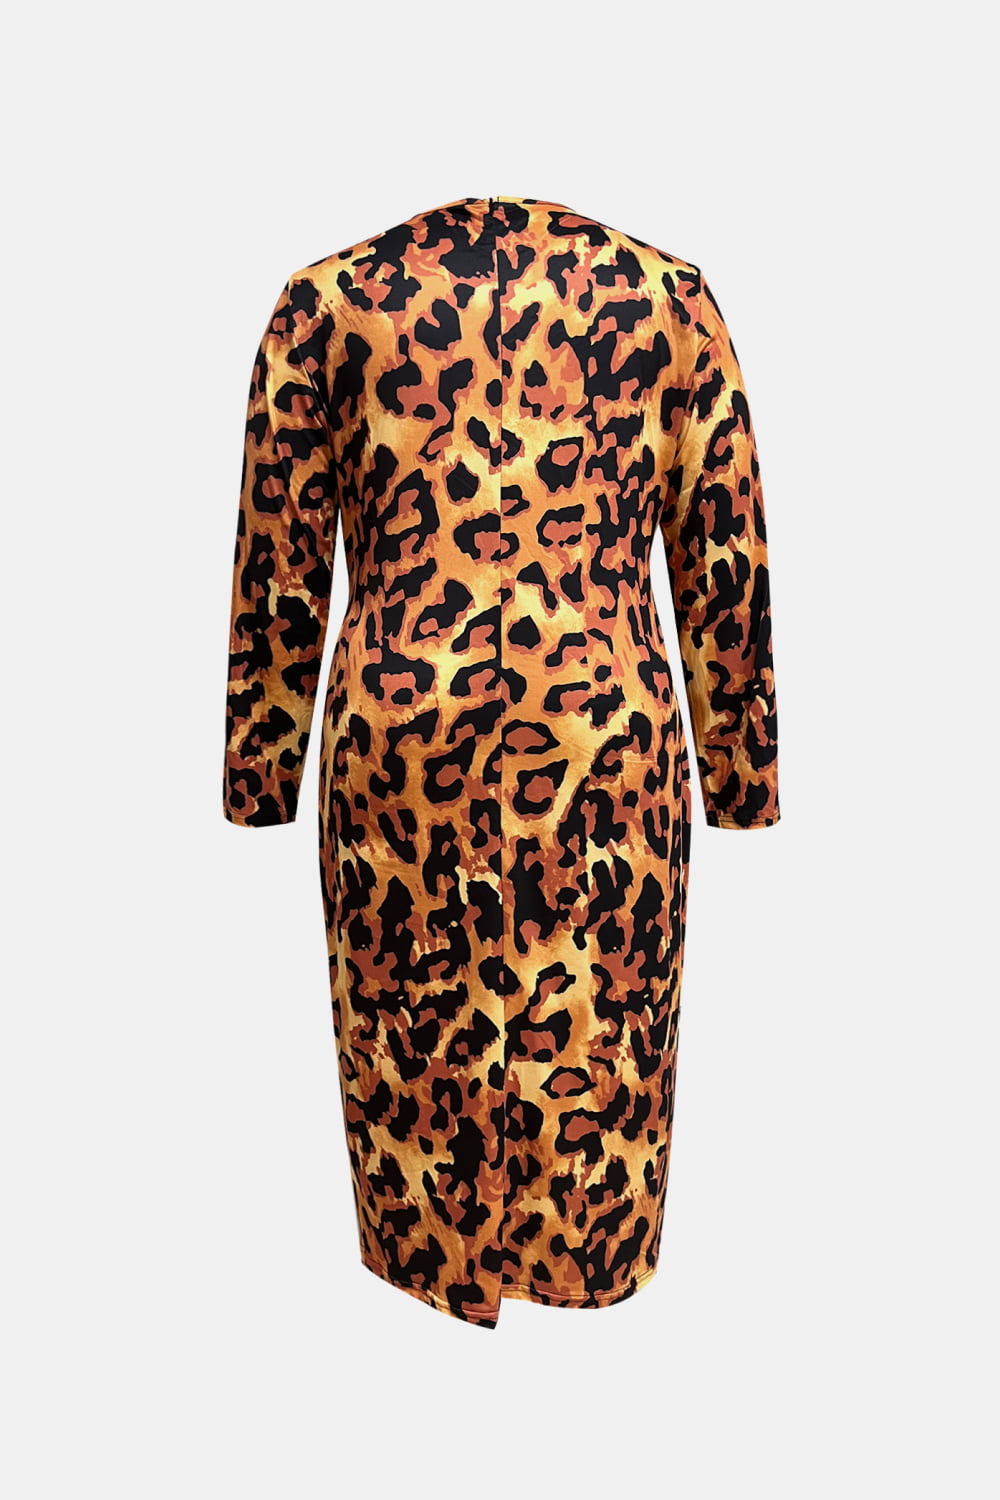 Surplice Neck Leopard Long Sleeve Dress - Cowtown Bling N Things